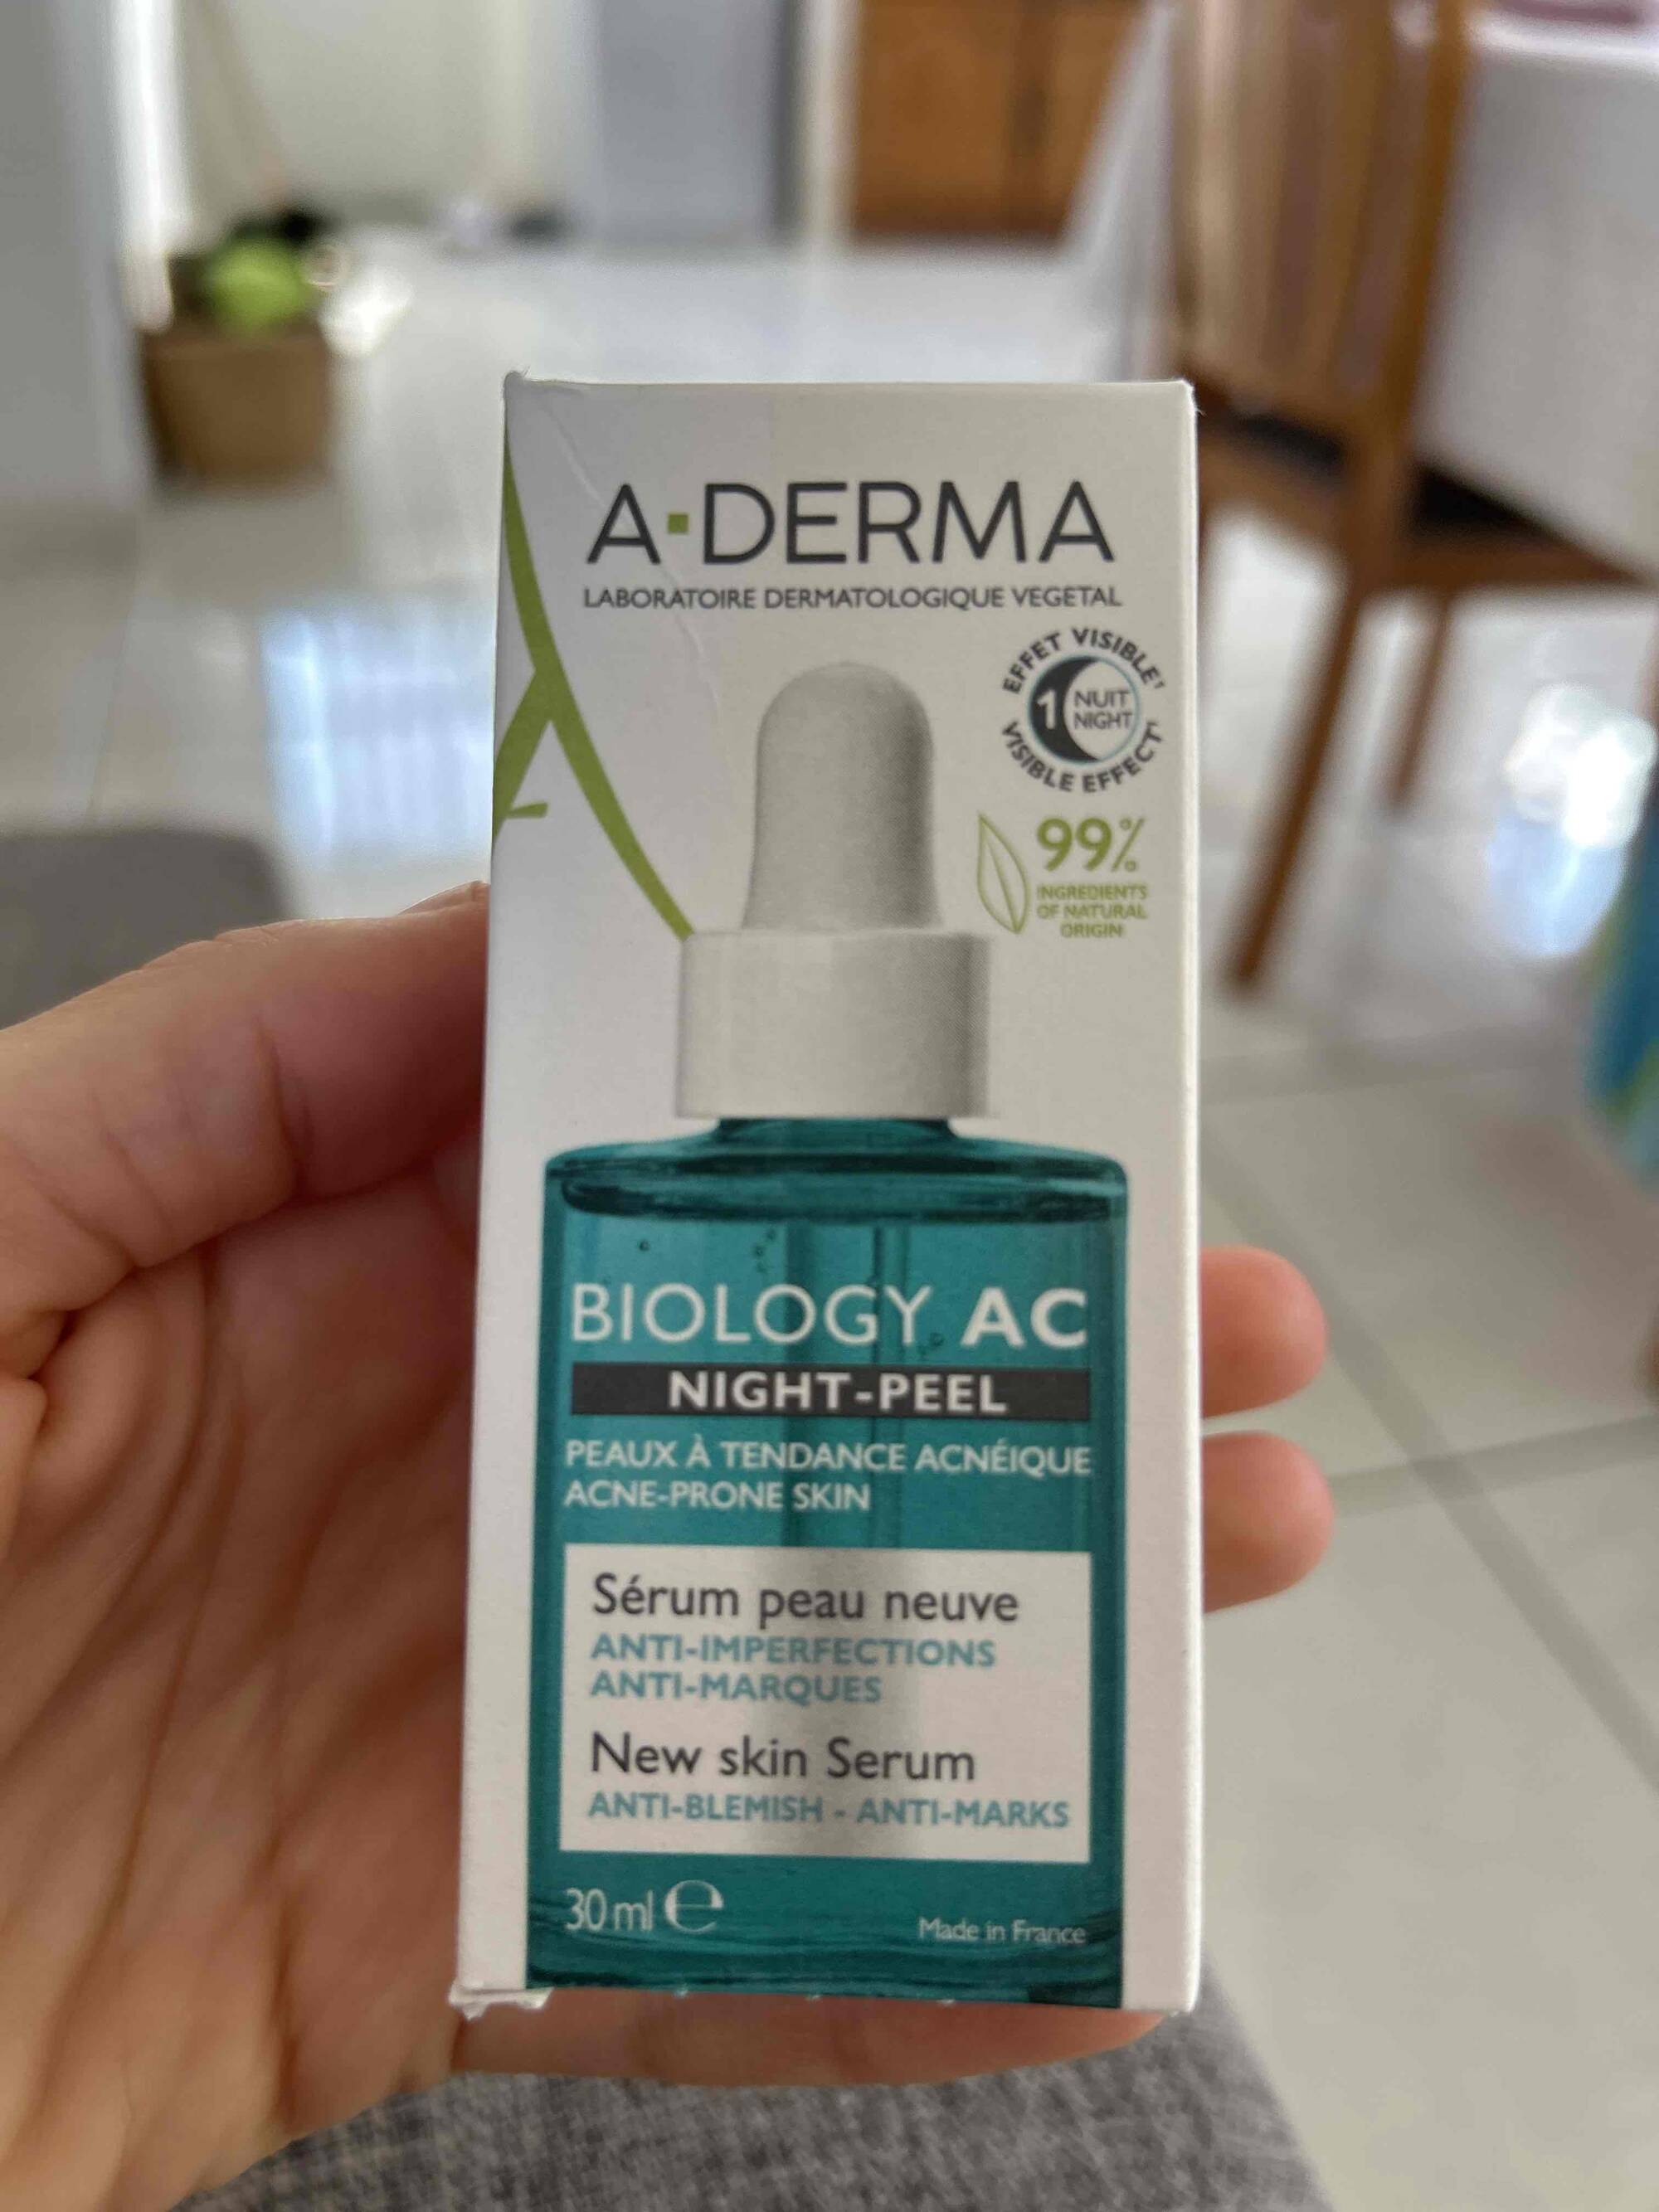 A-DERMA - Biology AC - Sérum peau neuve 